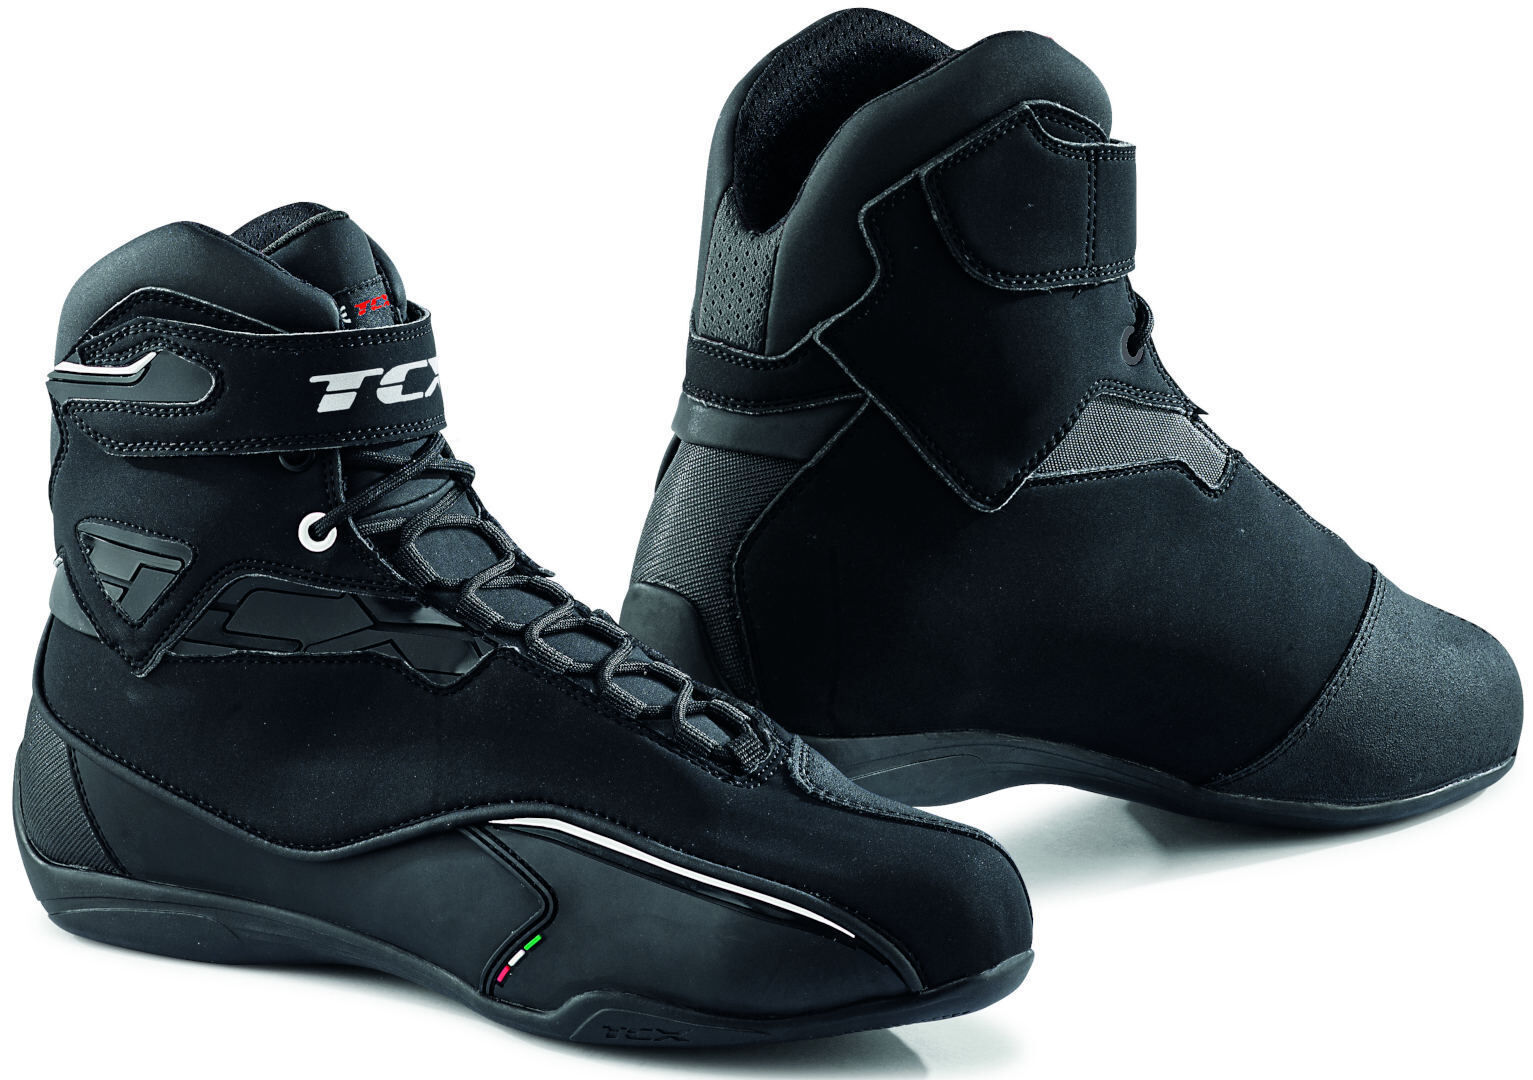 Tcx Zeta Waterproof Motorcycle Shoes  - Black